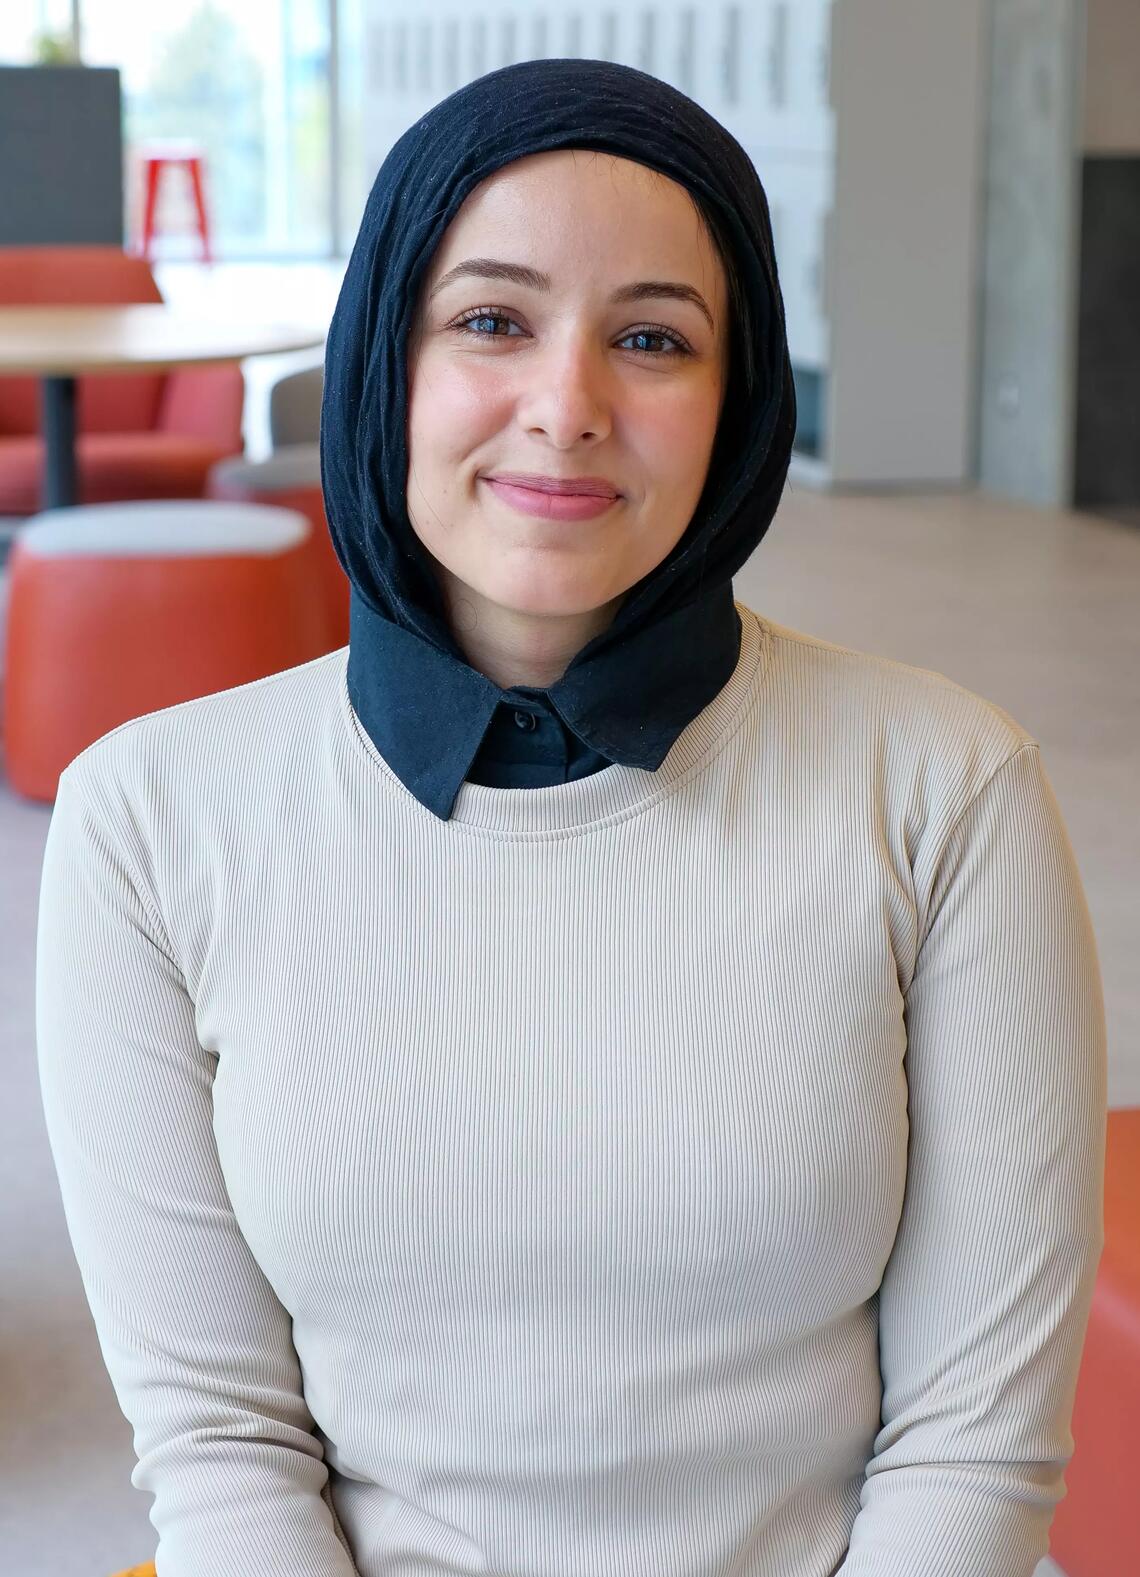 A woman wearing a hijab and collared shirt smiles at the camera